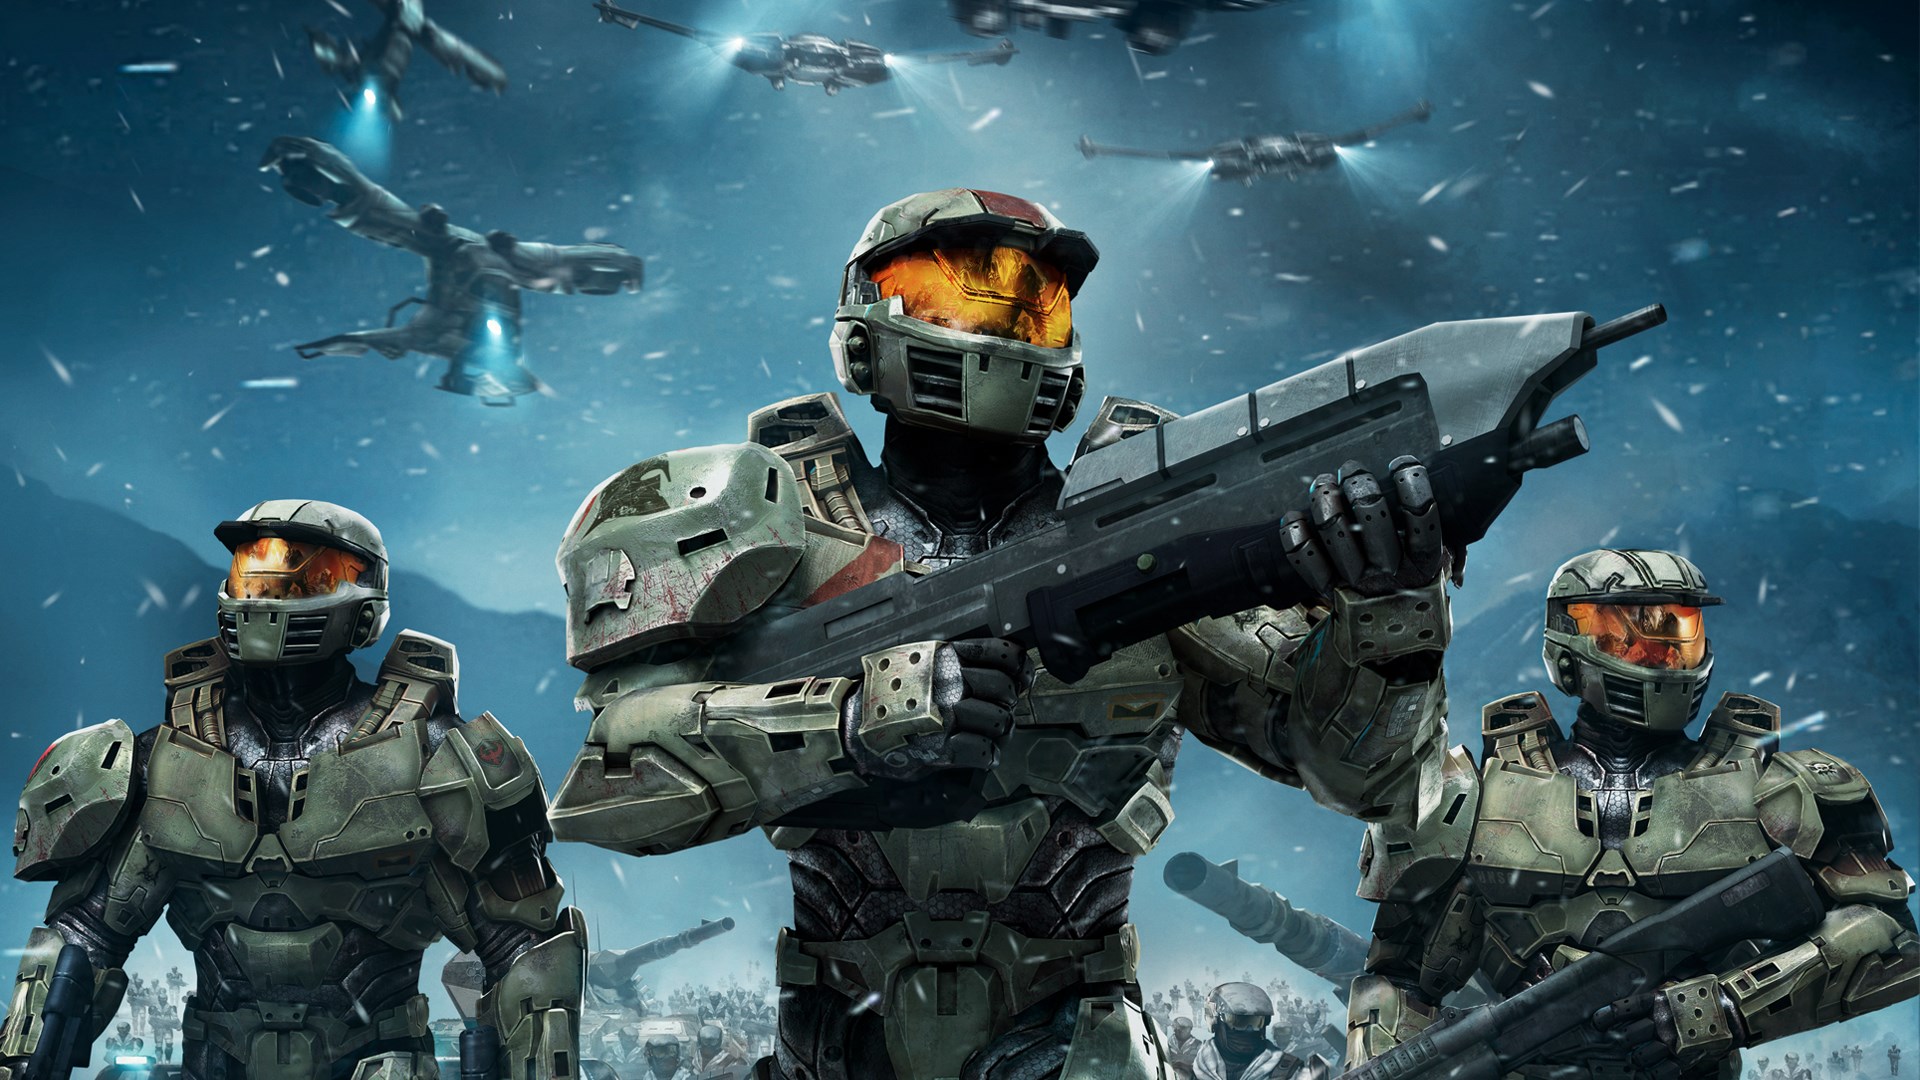 Halo, série live-action dos jogos de Xbox, ganha primeiro trailer